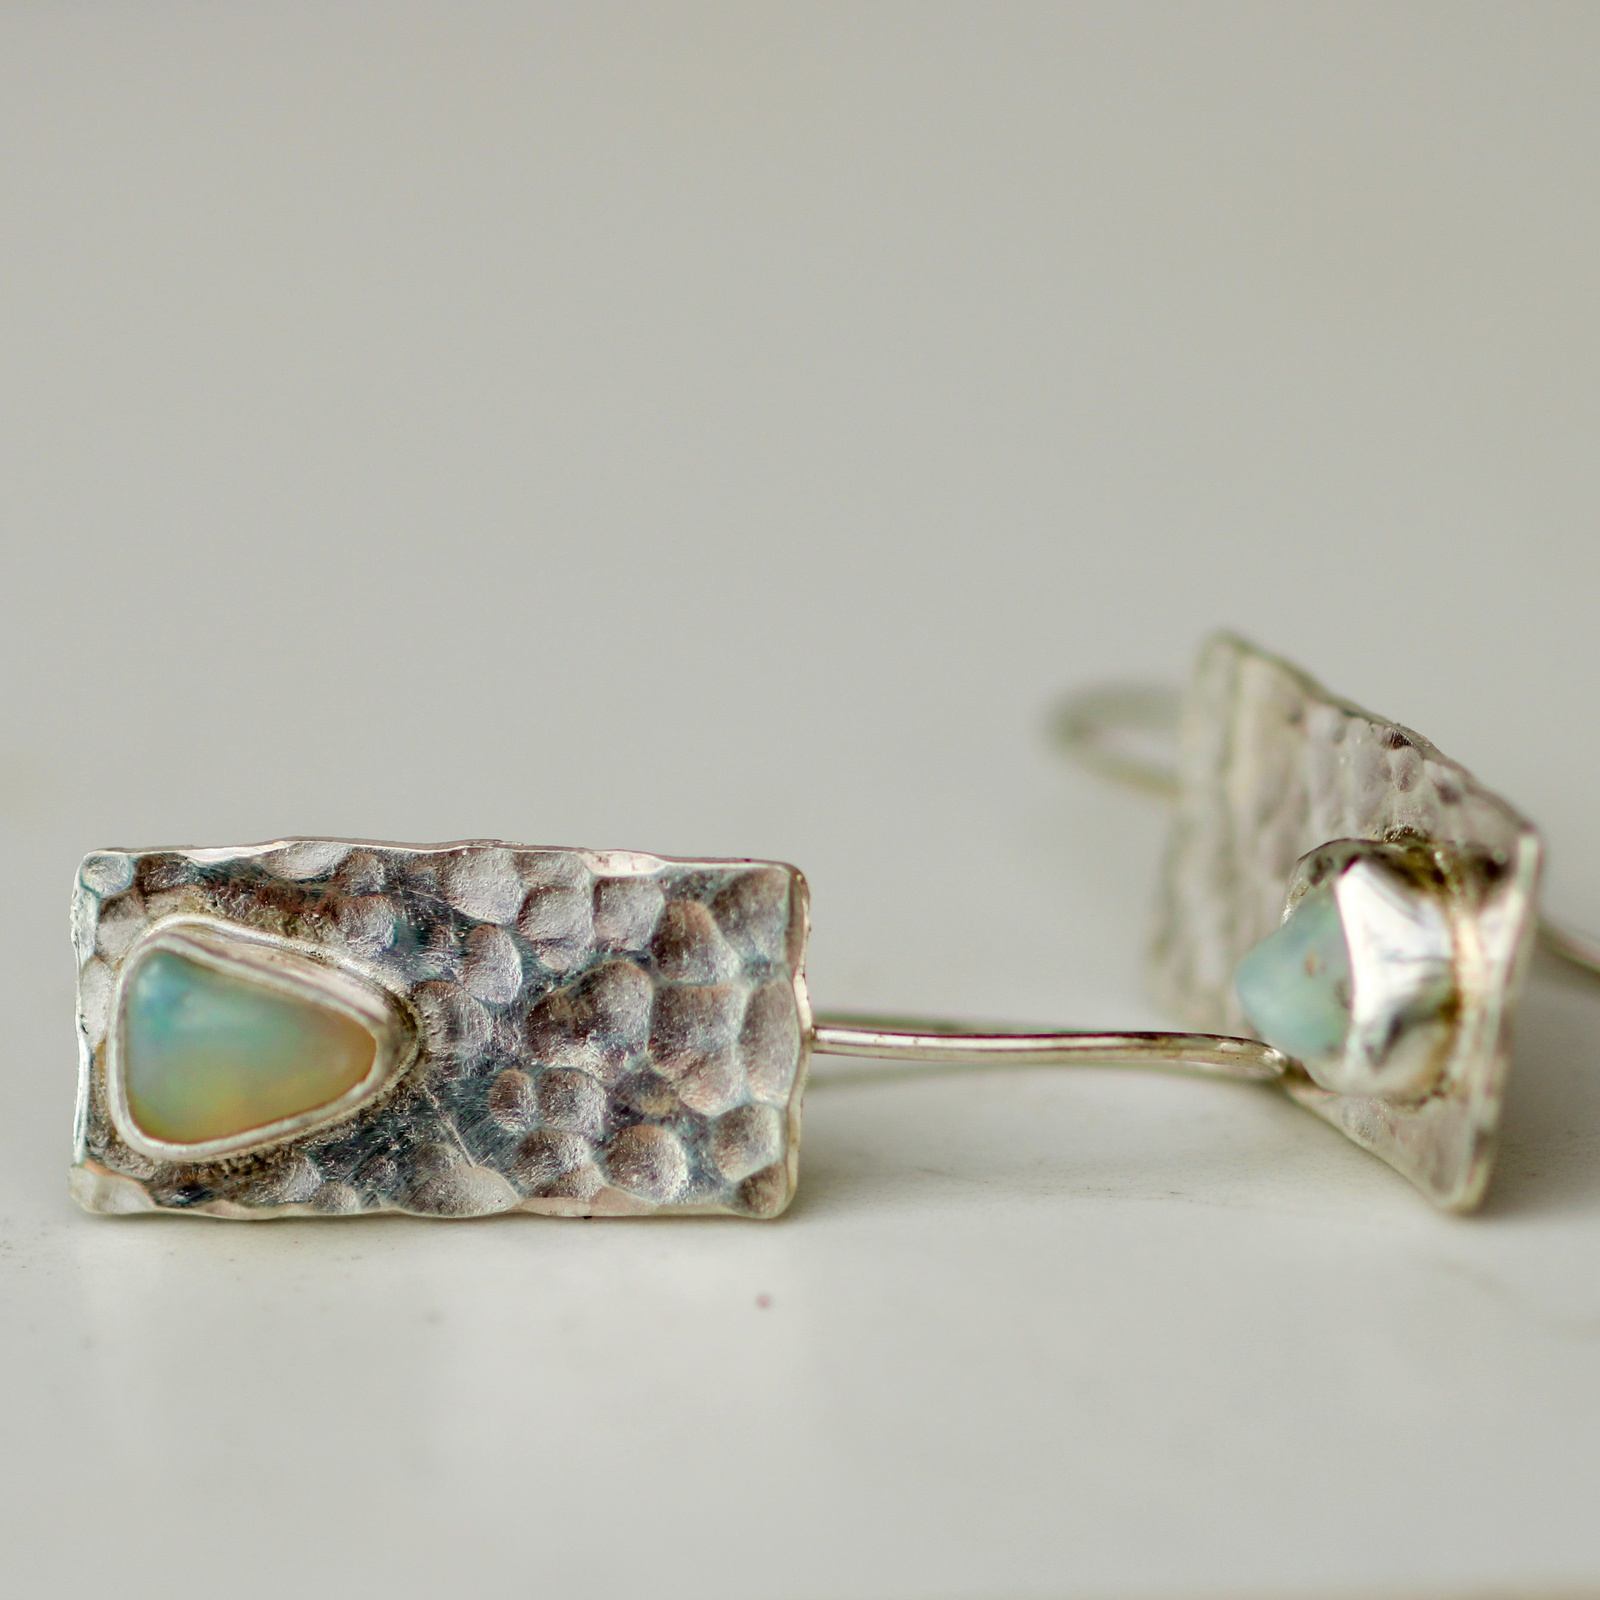 1PC Hot Sale Healing Reiki Raw Opal Stone Pendants Natural Opalite Mineral  Pendants Fit Jewelry Making